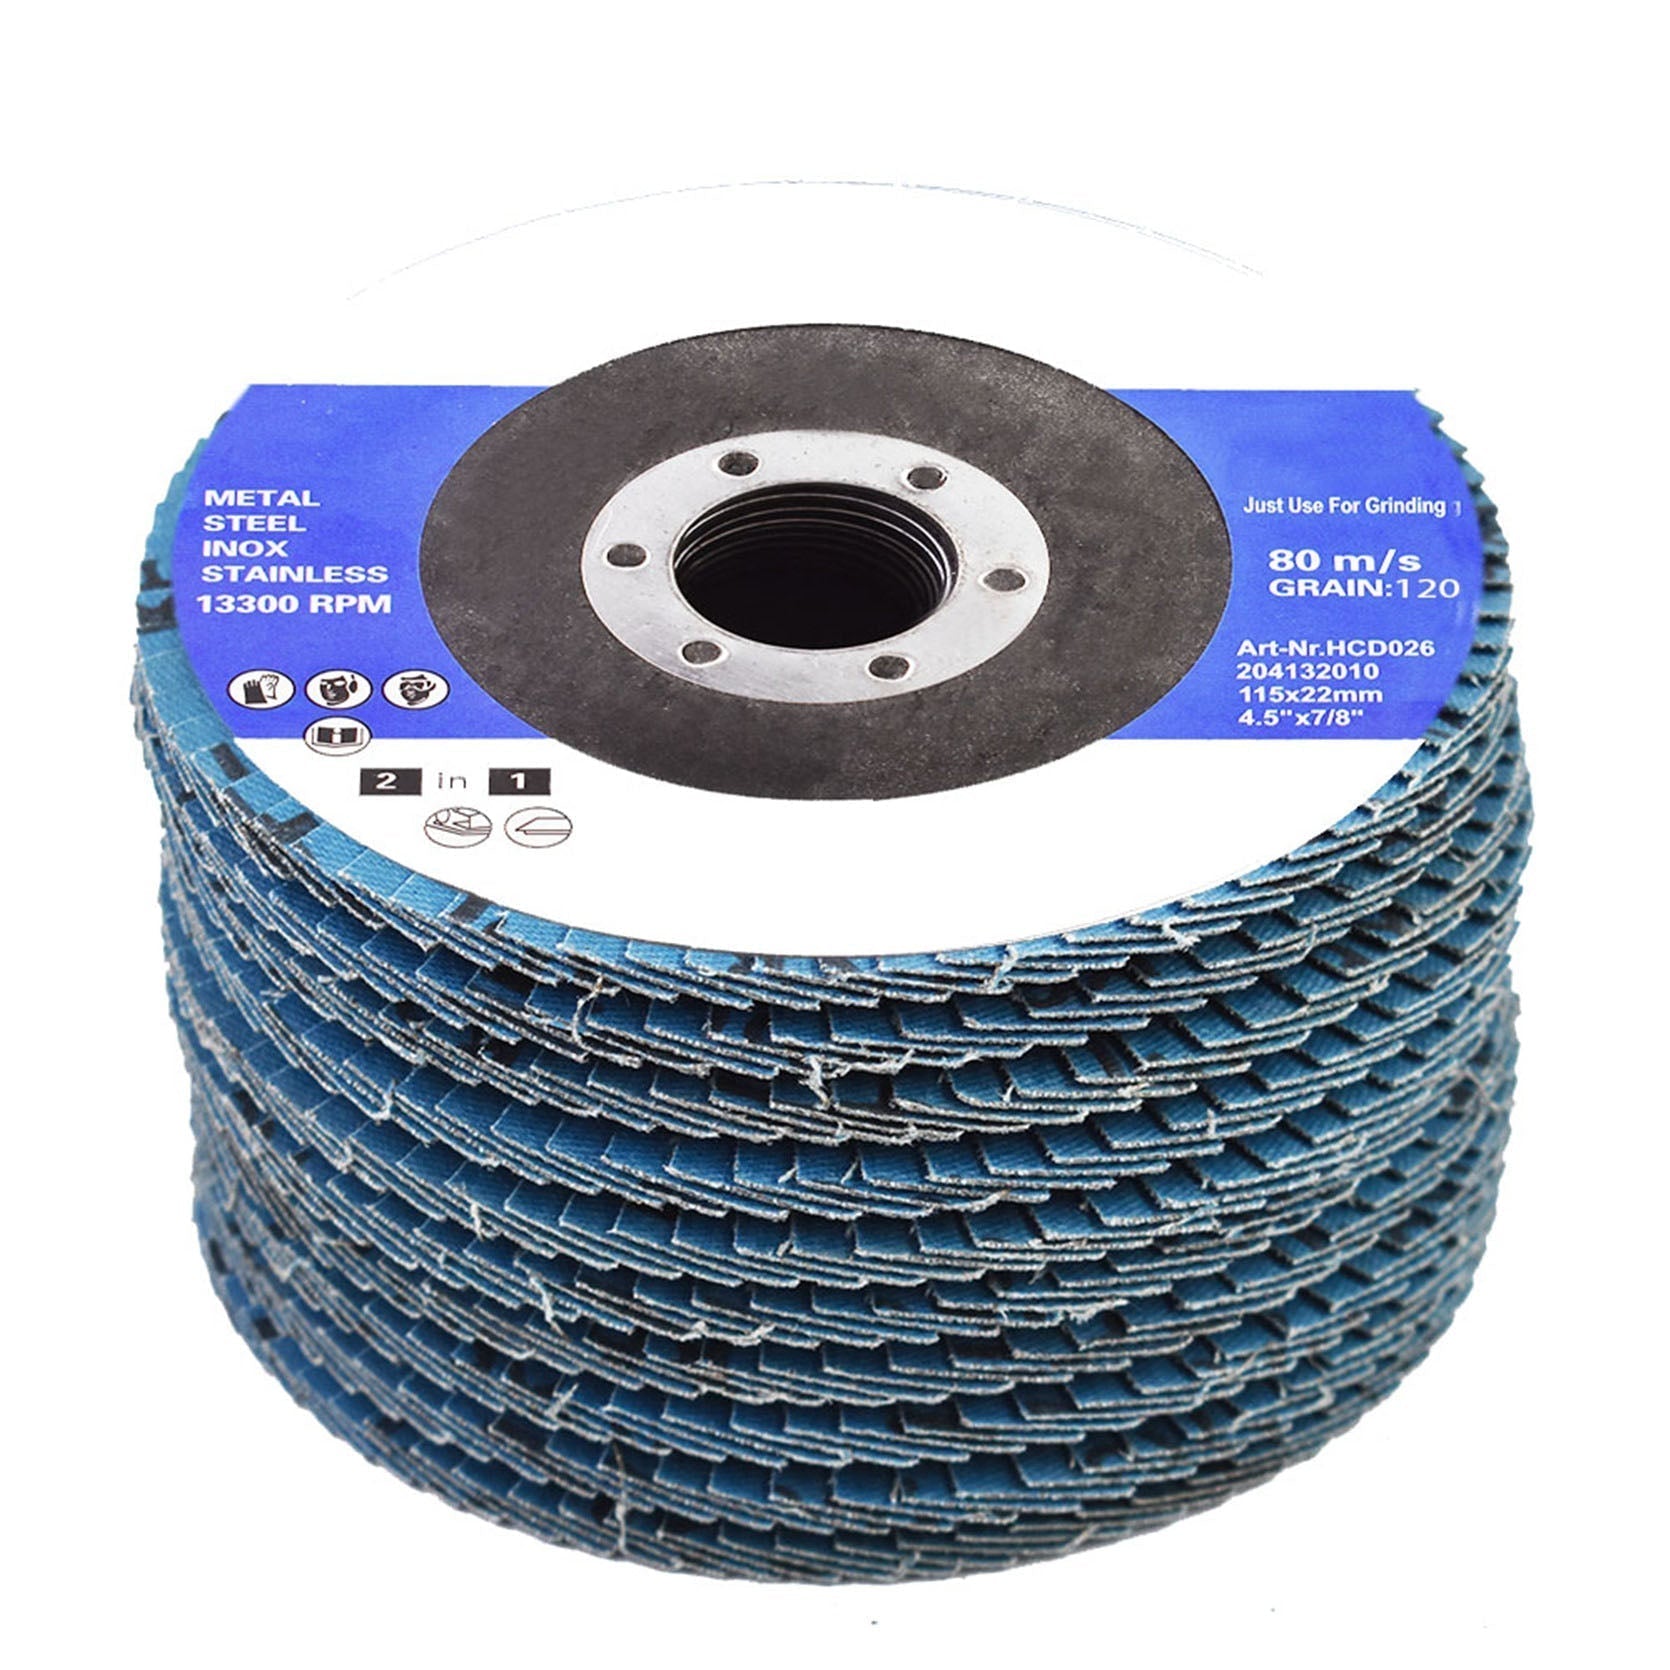 findmall 50 Pcs 4-1/2" X 7/8" 120 Grits Premium Zirconia Flap Discs Grinding Wheel Sandpaper Fit for Grinding FINDMALLPARTS